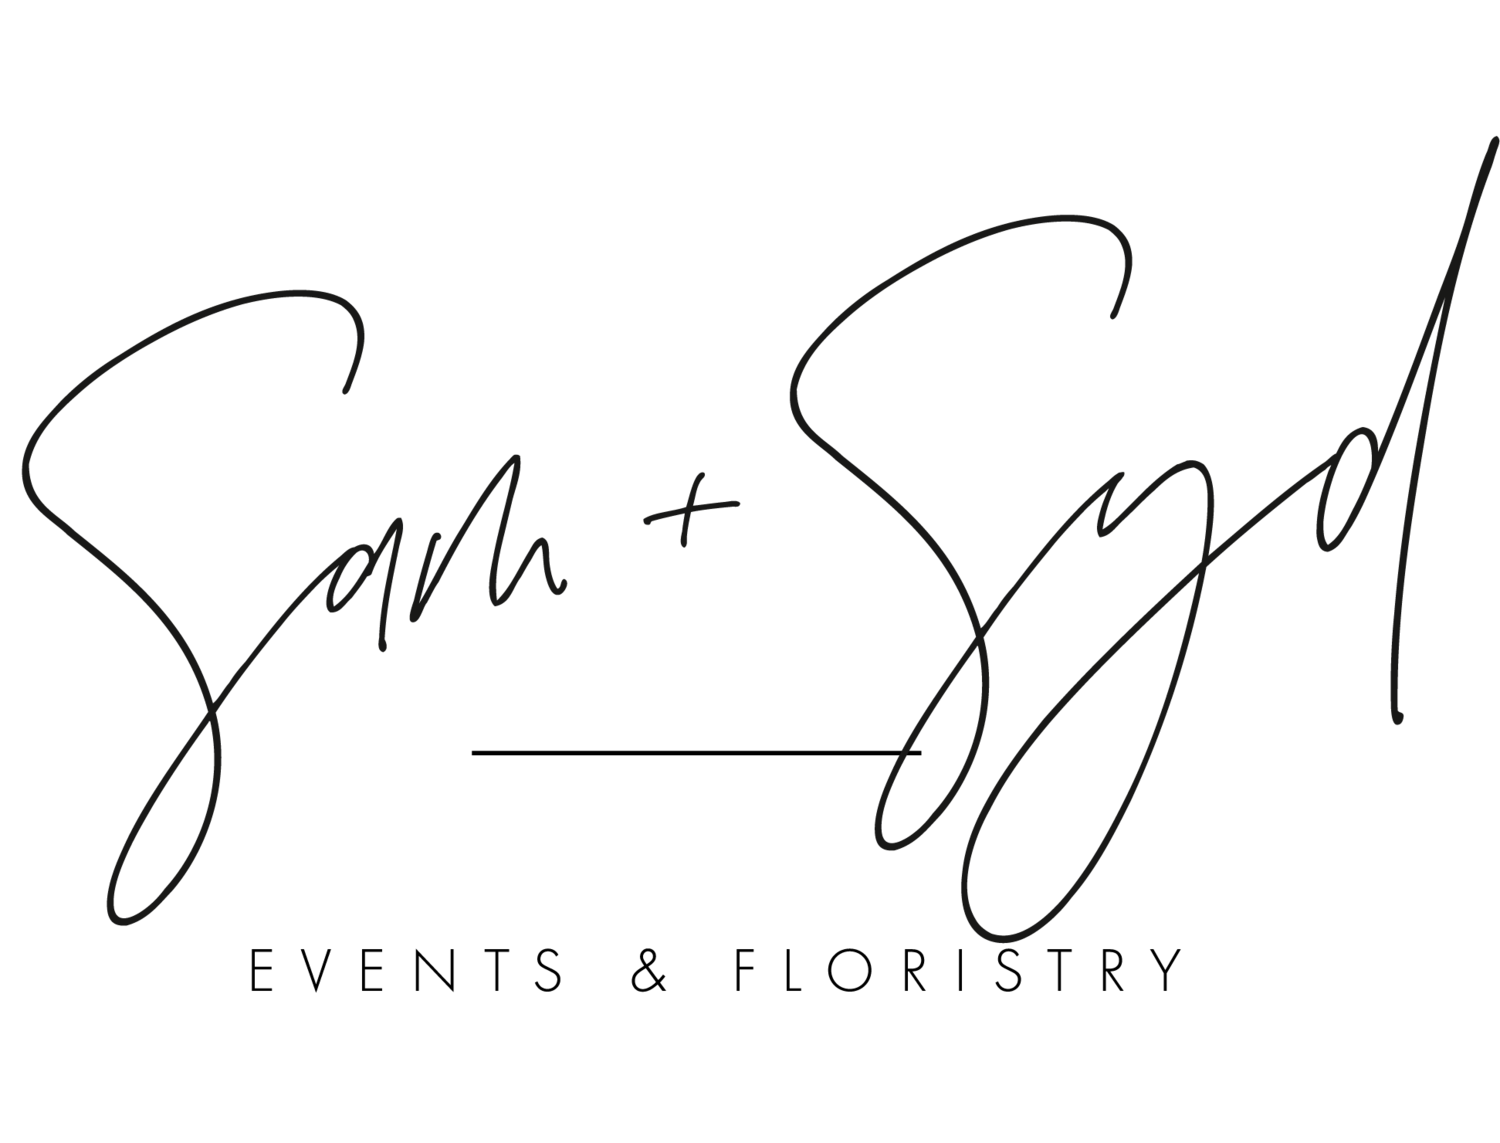 Sam & Syd 